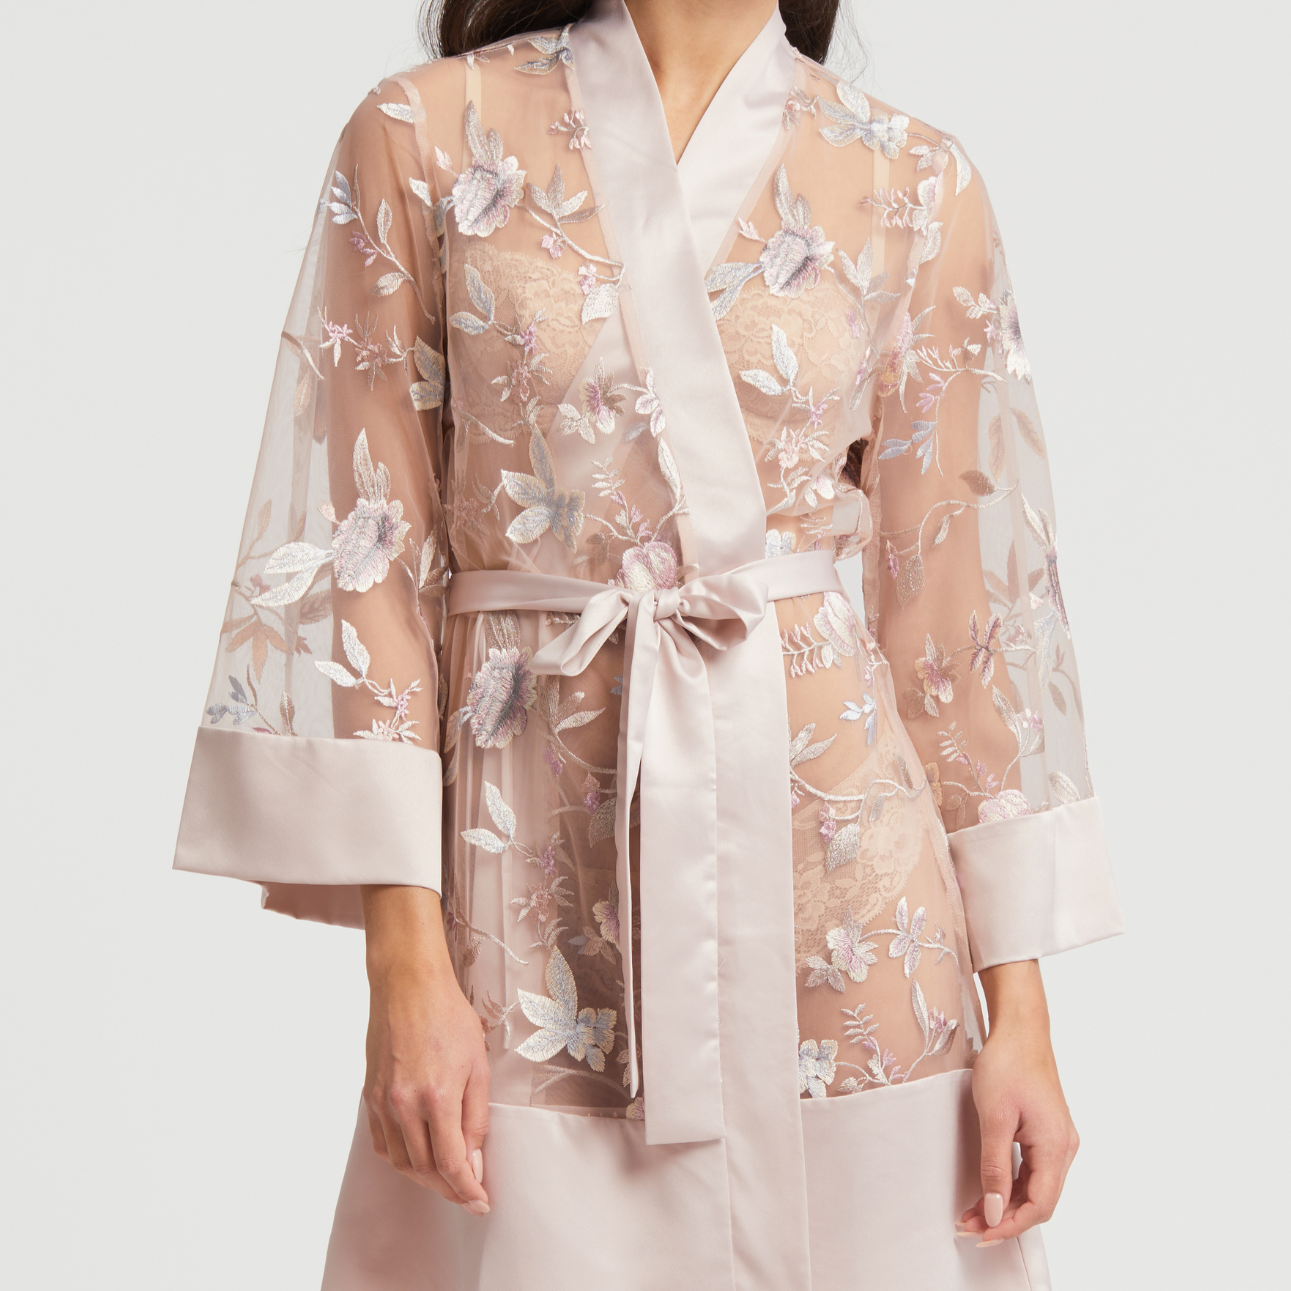 Stunning Coverup - 486 - Sepia Rose Sleep & Lounge - Sleep - Robes & Kimonos Rya Collection PINK XS/S 